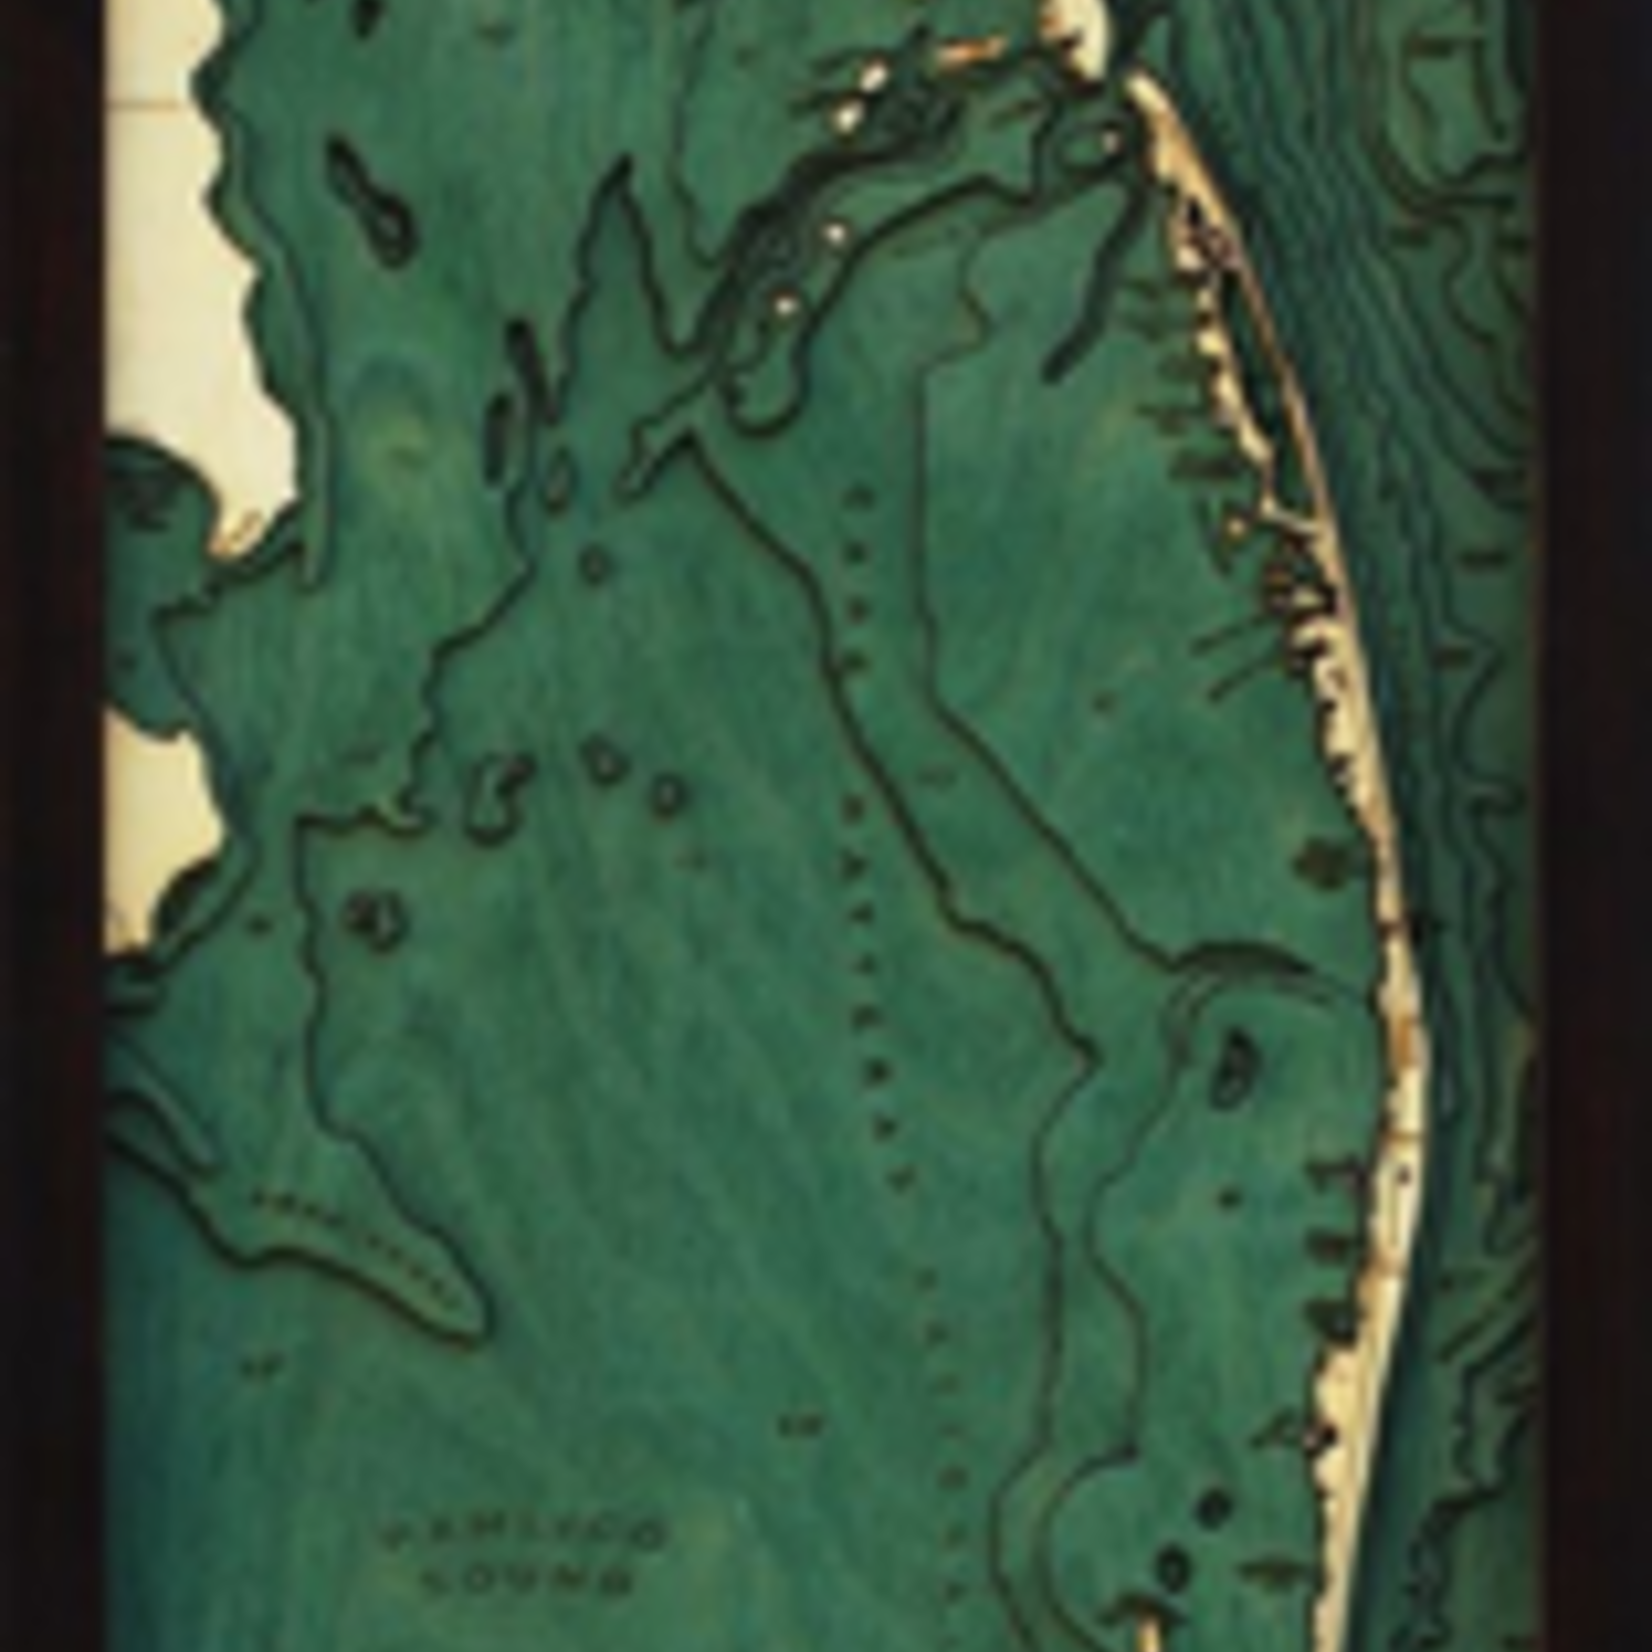 WoodChart Outer Banks, NC (Bathymetric 3-D Nautical WOODCHART)